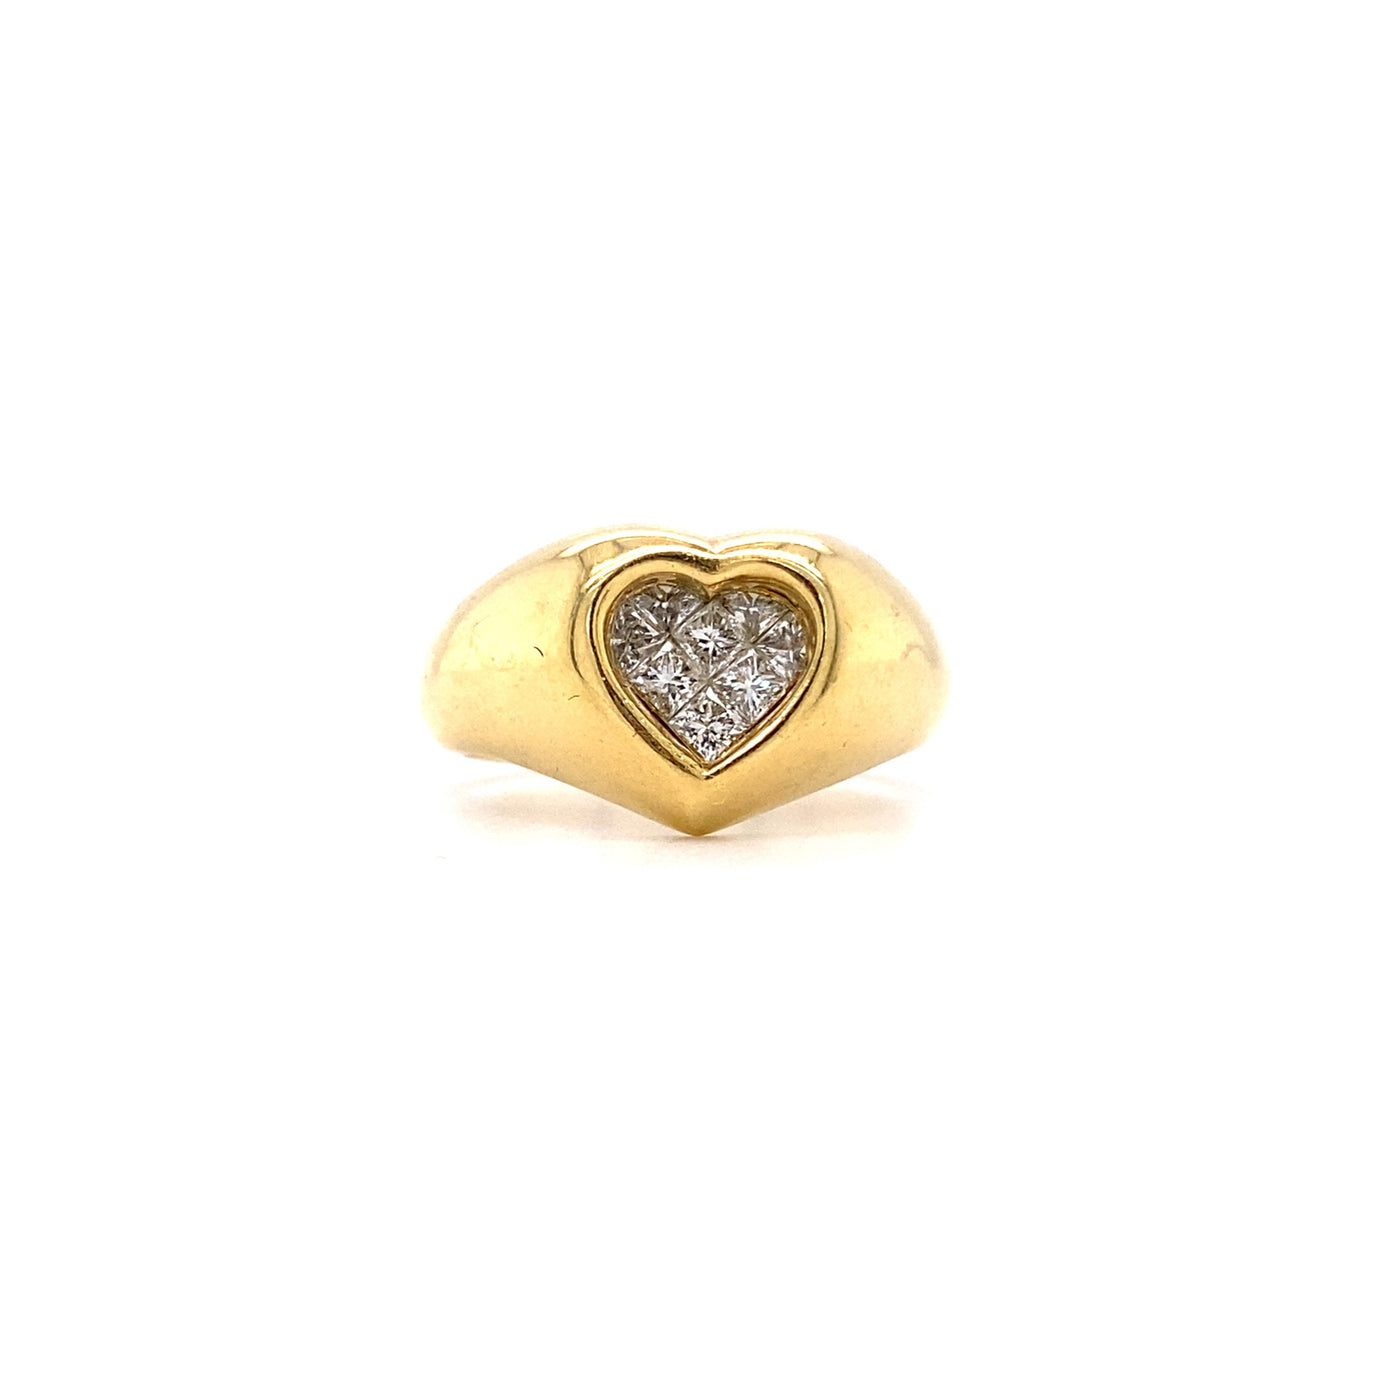 Our Heart of Gold - Herzring mit Diamanten